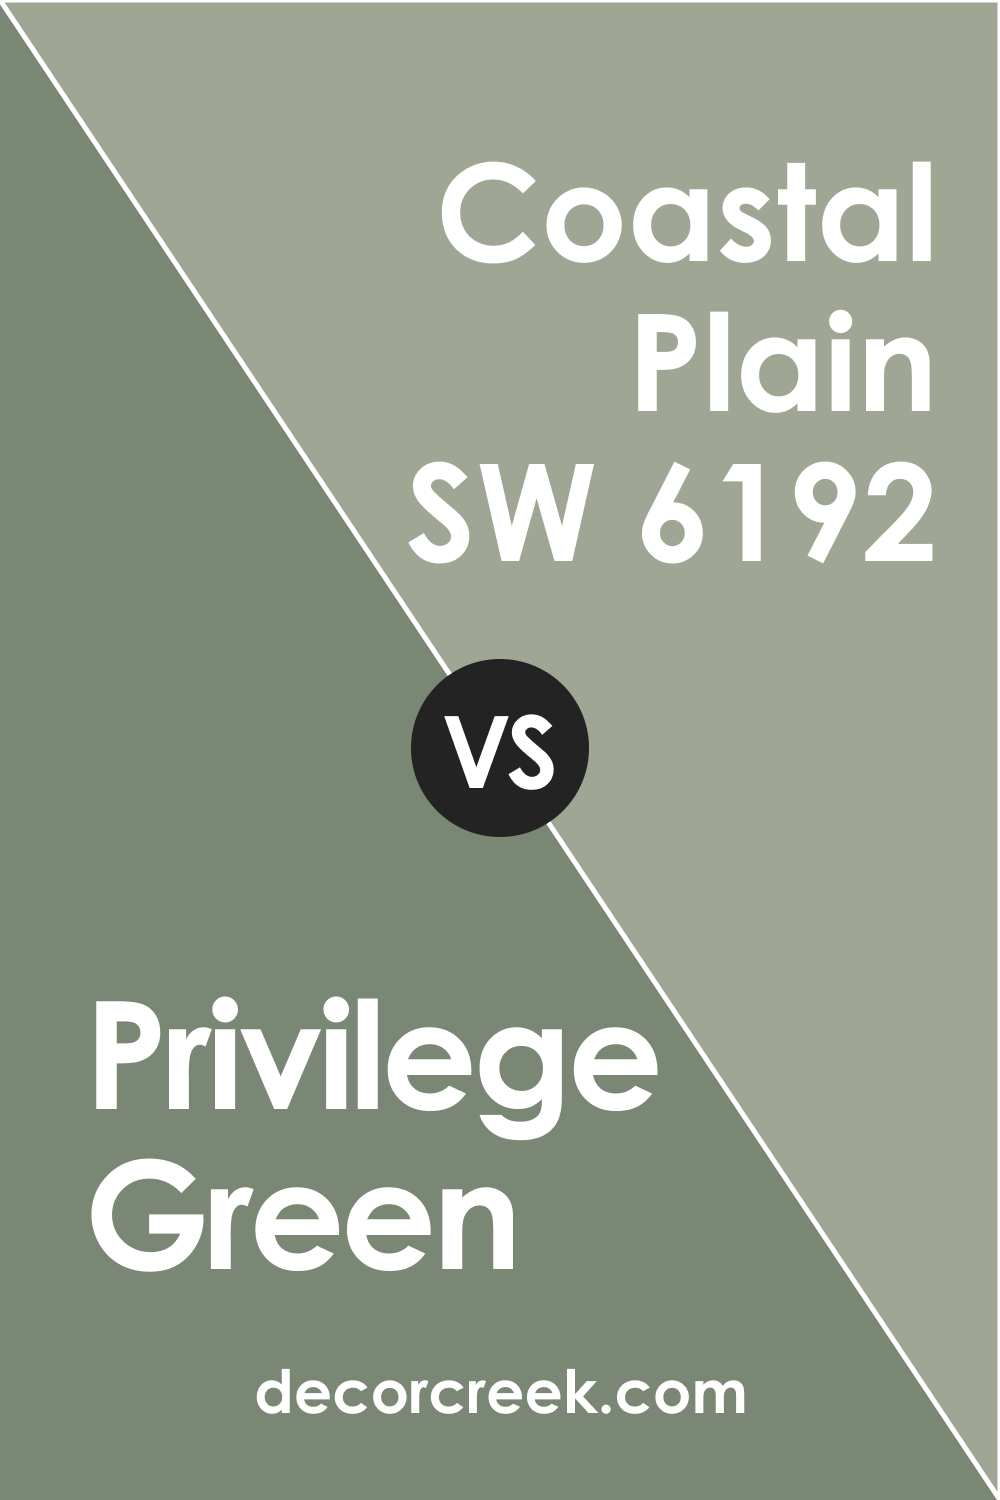 Privilege Green vs Coastal Plane